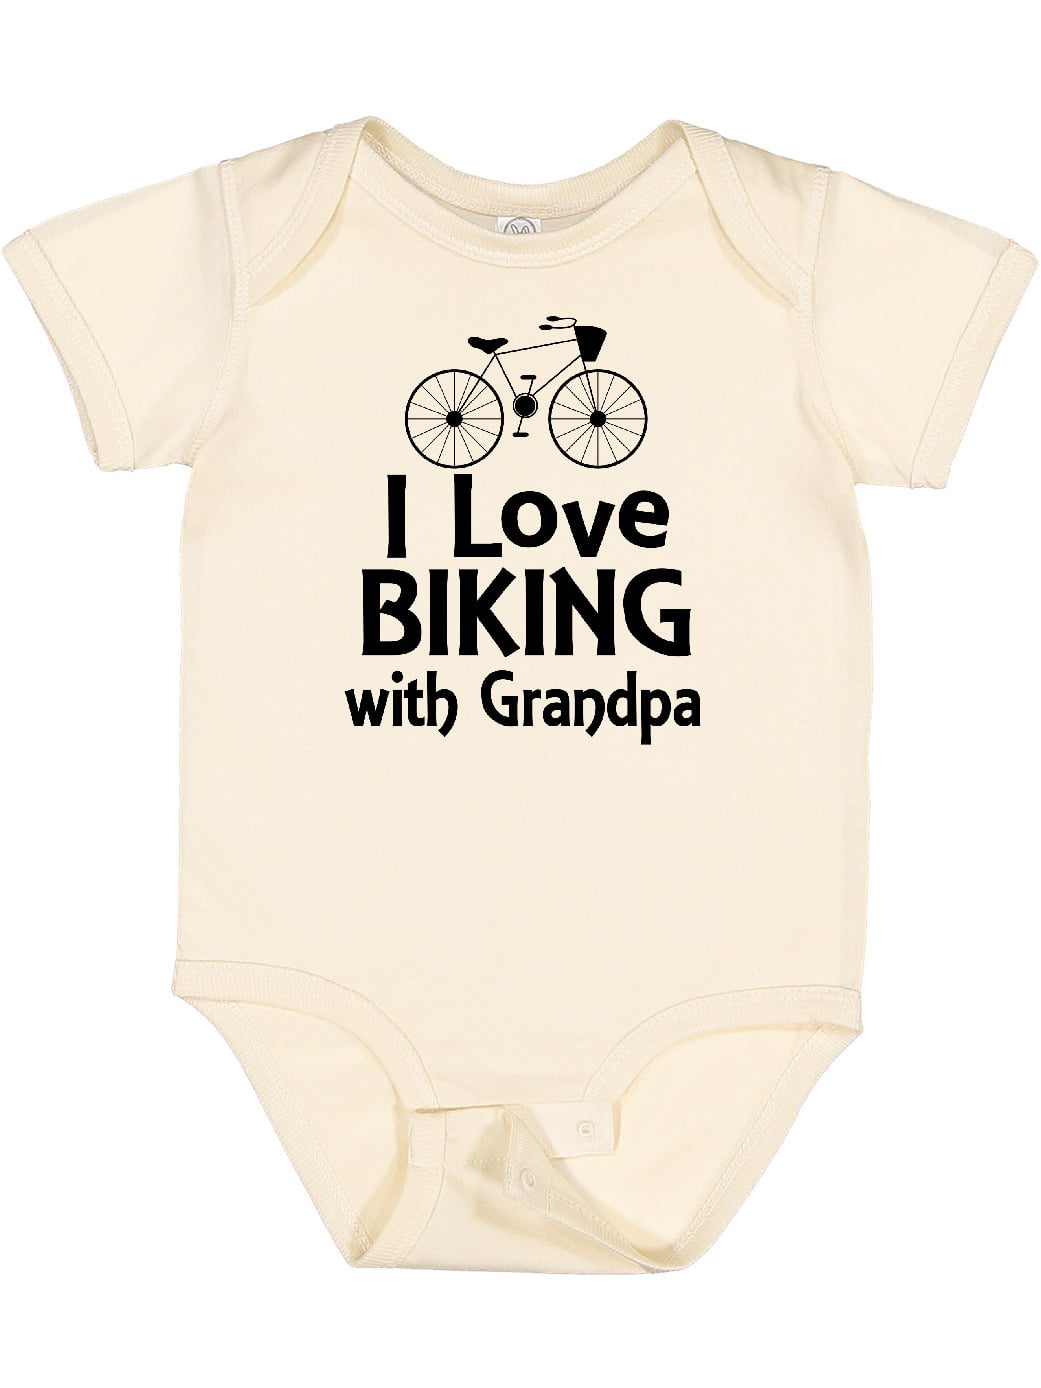 My Grandad a biker sports classic bike black pink romper bodysuit baby boy girl 